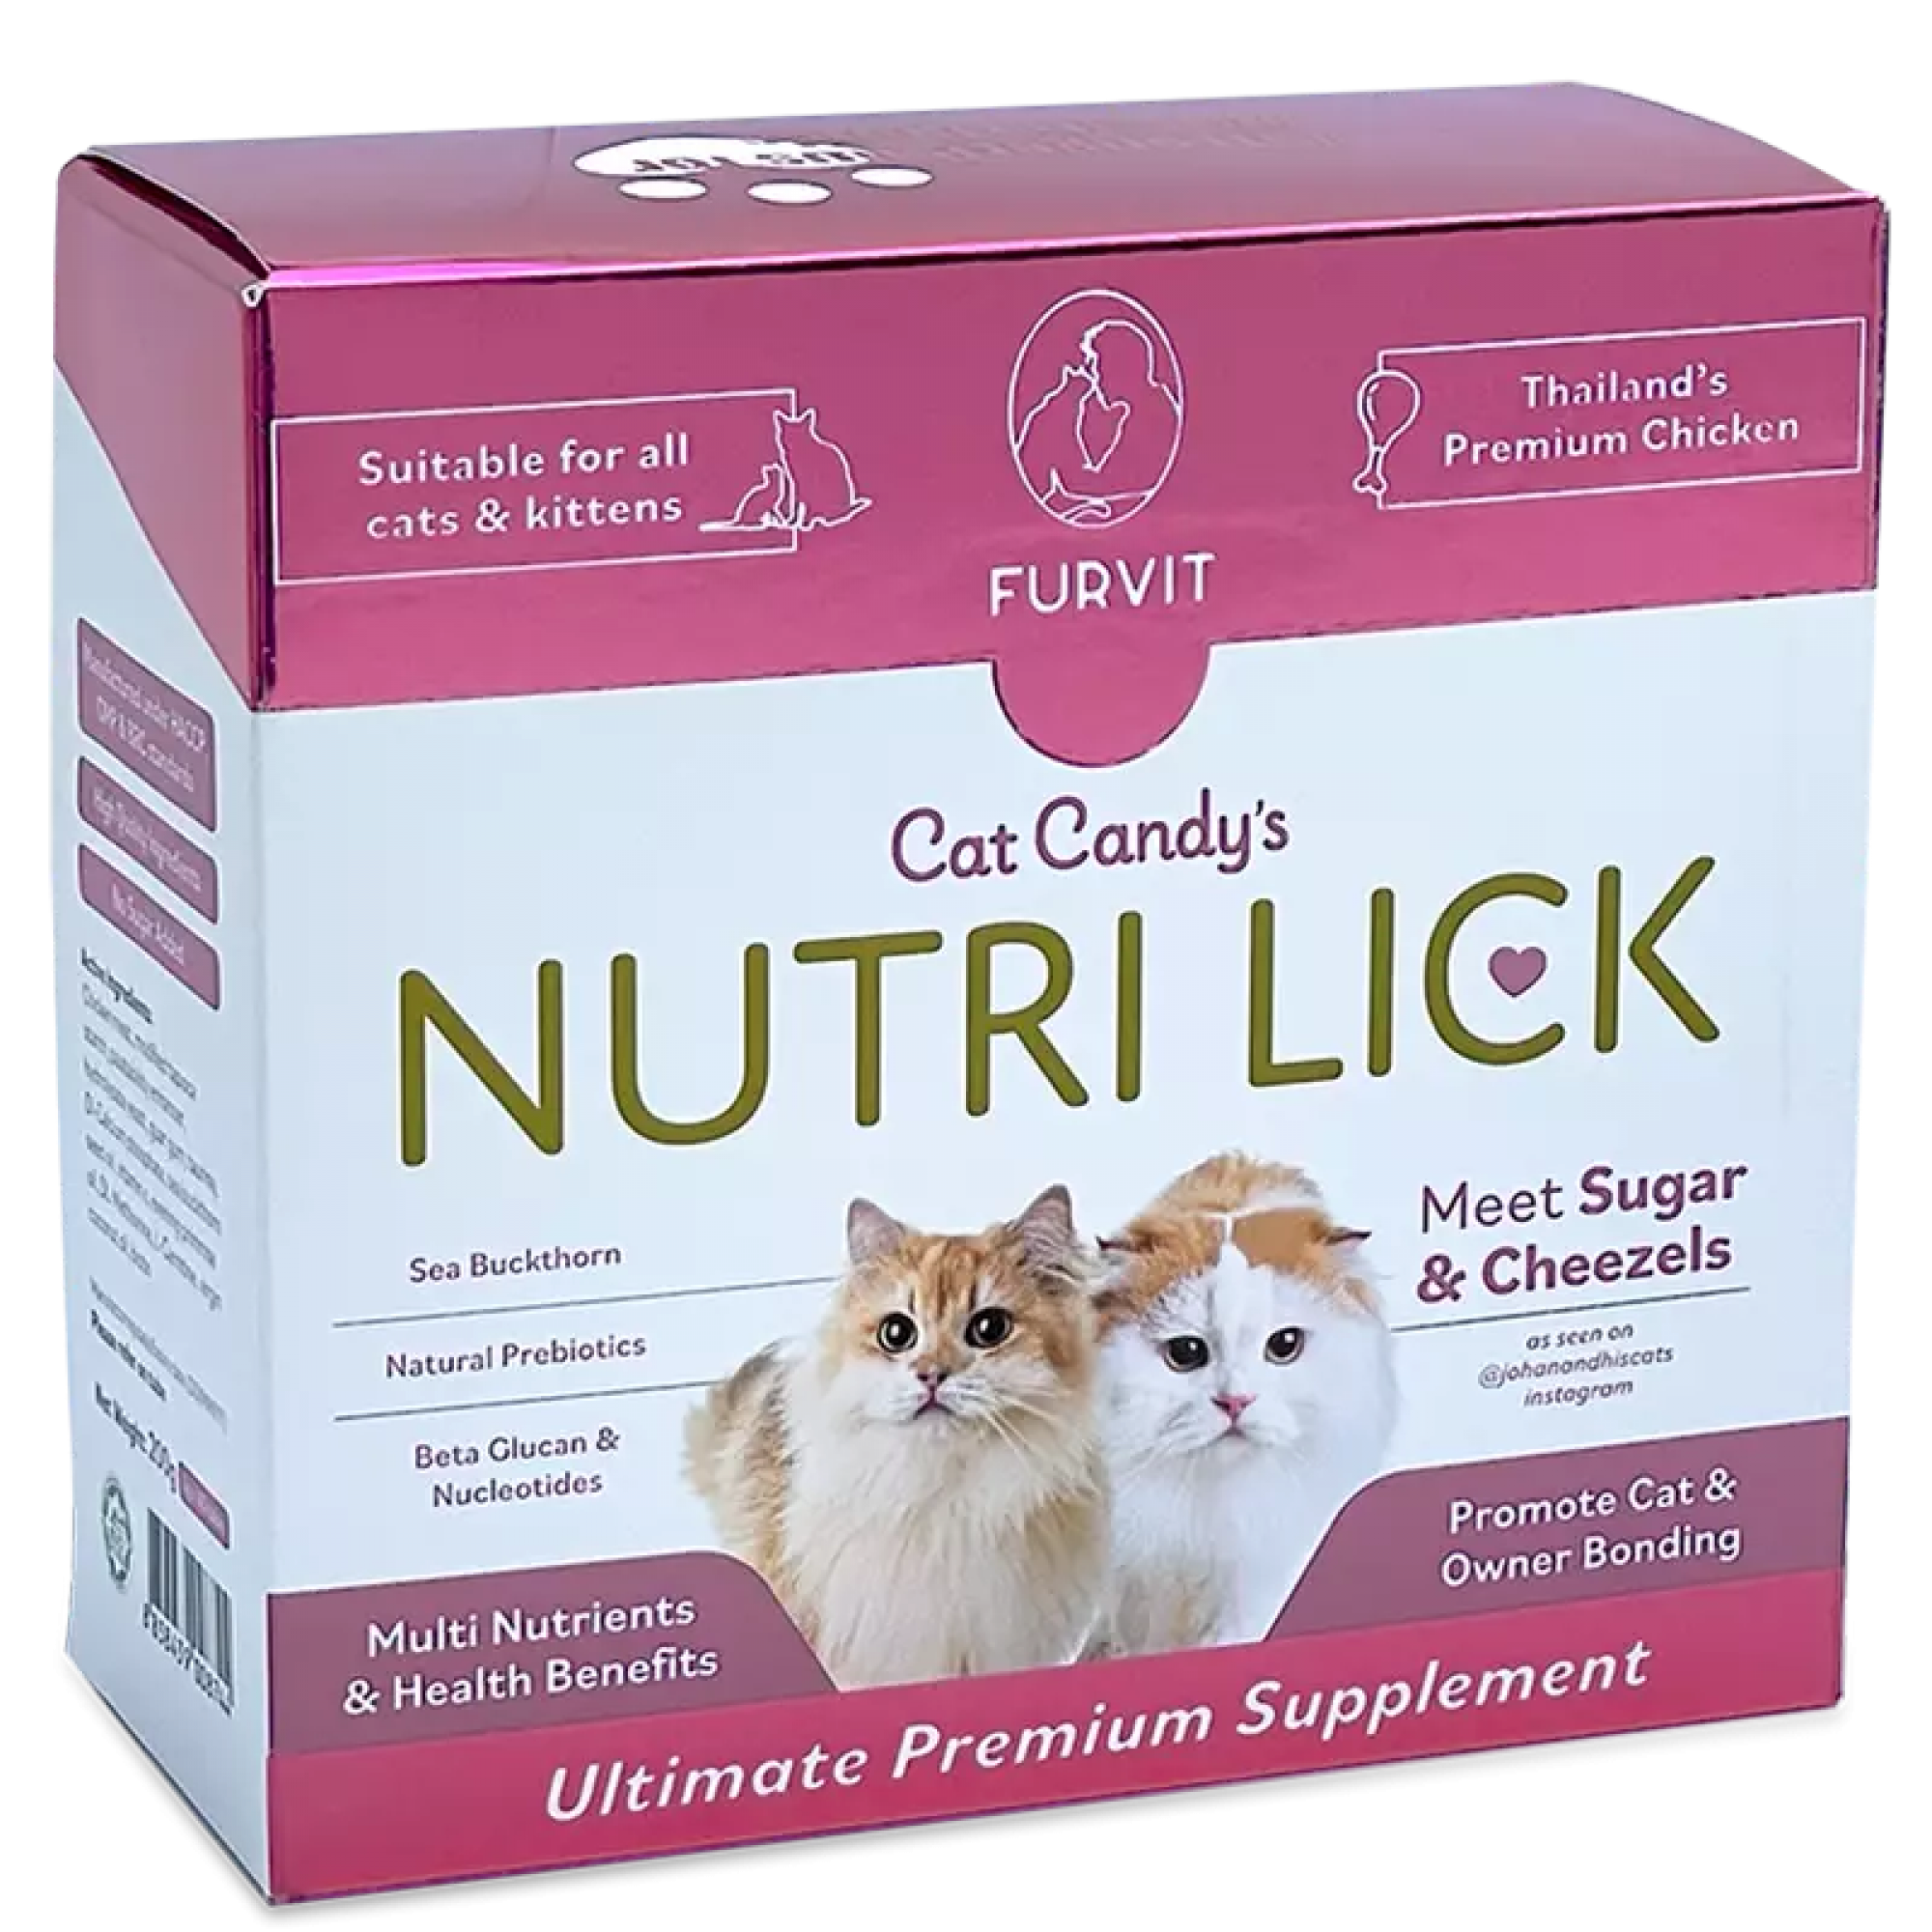 NutriLick Fruvit Cat Candy Supplement - Chicken